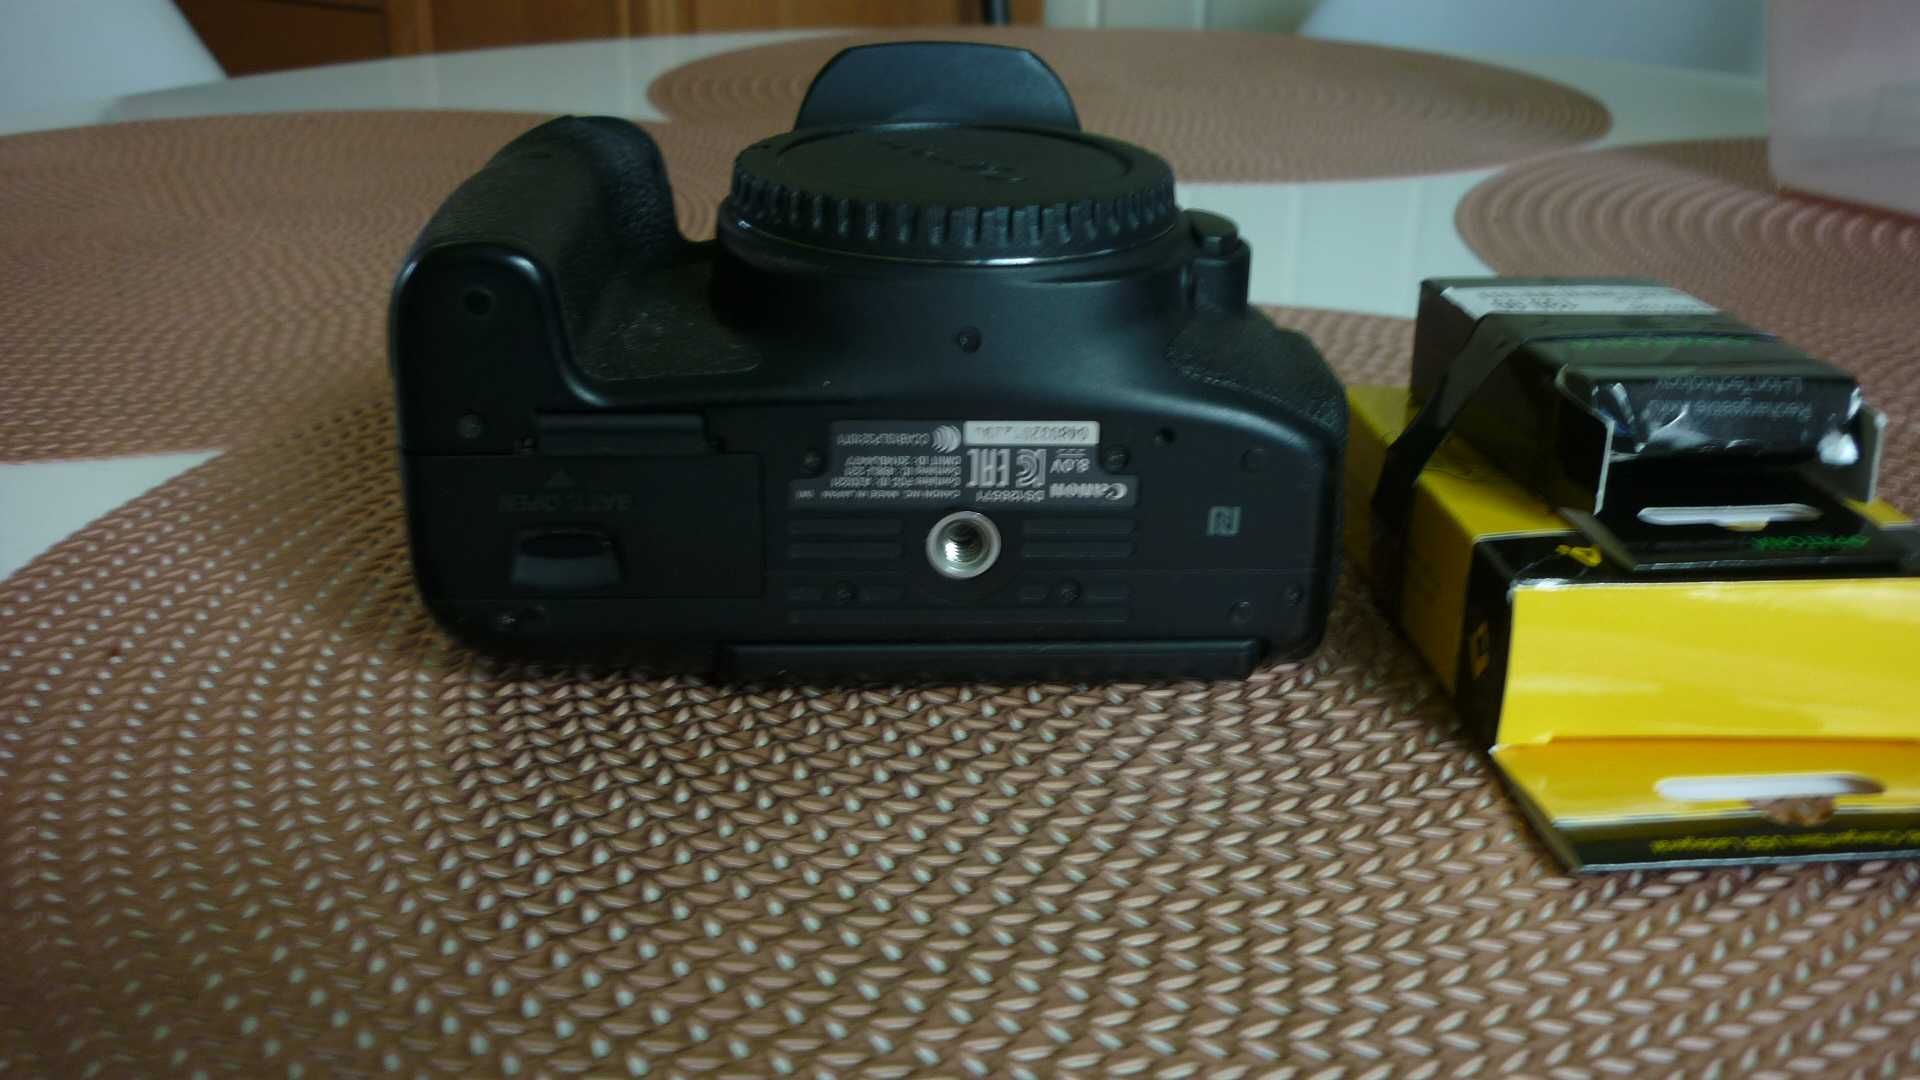 Aparat Canon 750D